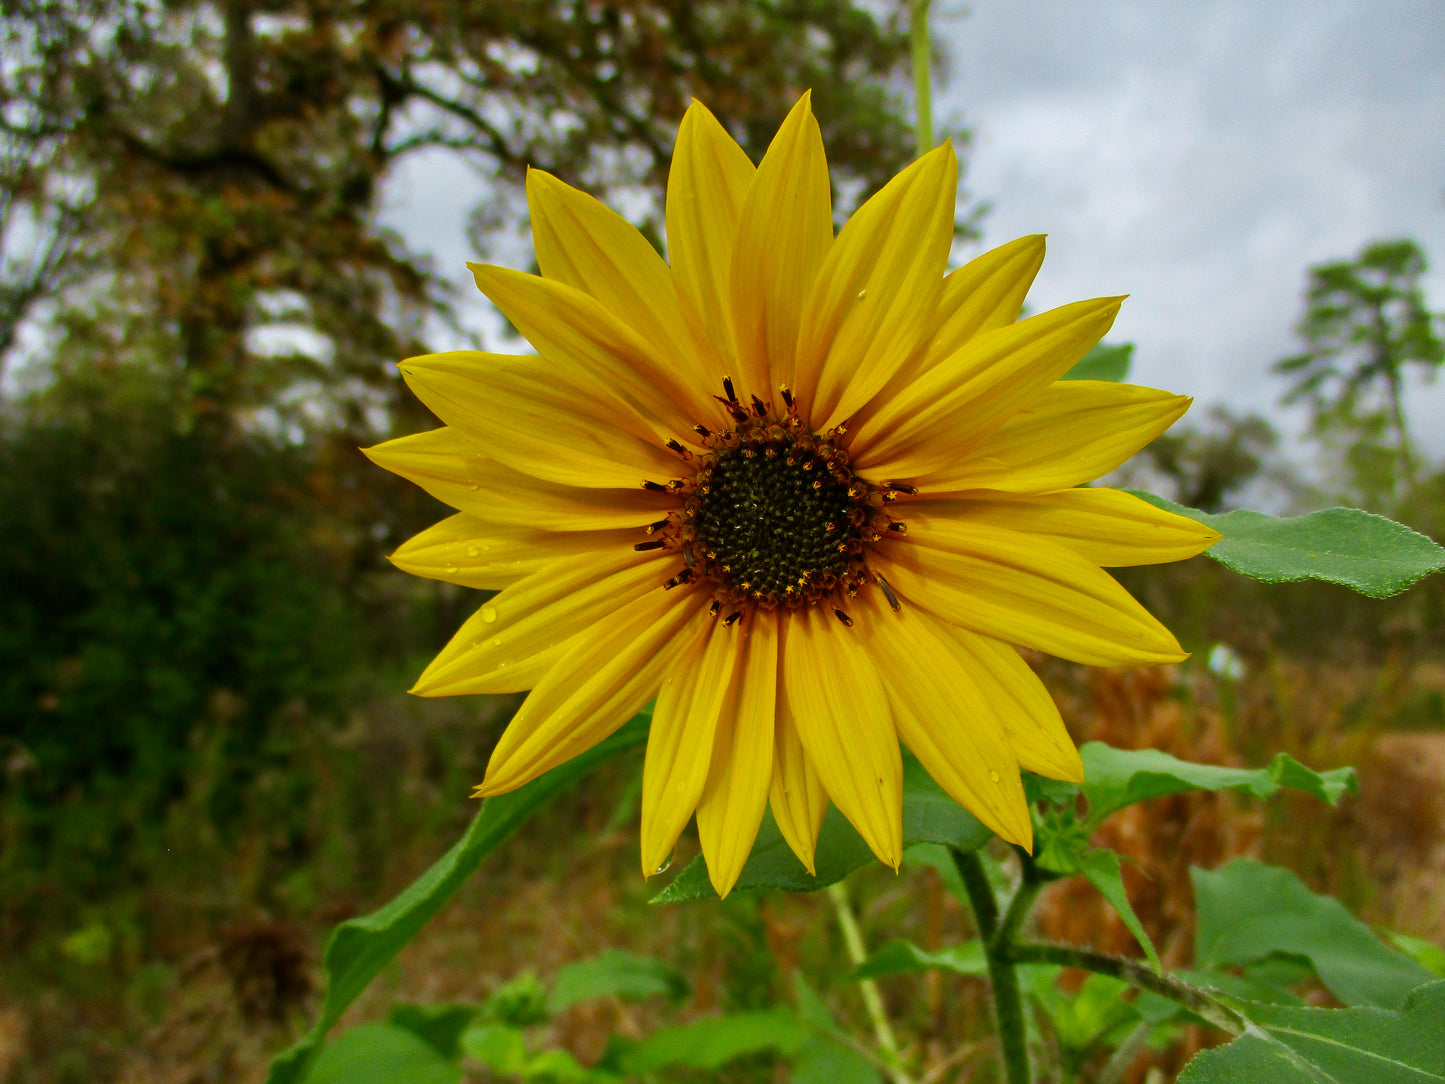 Photograph of Sunflower